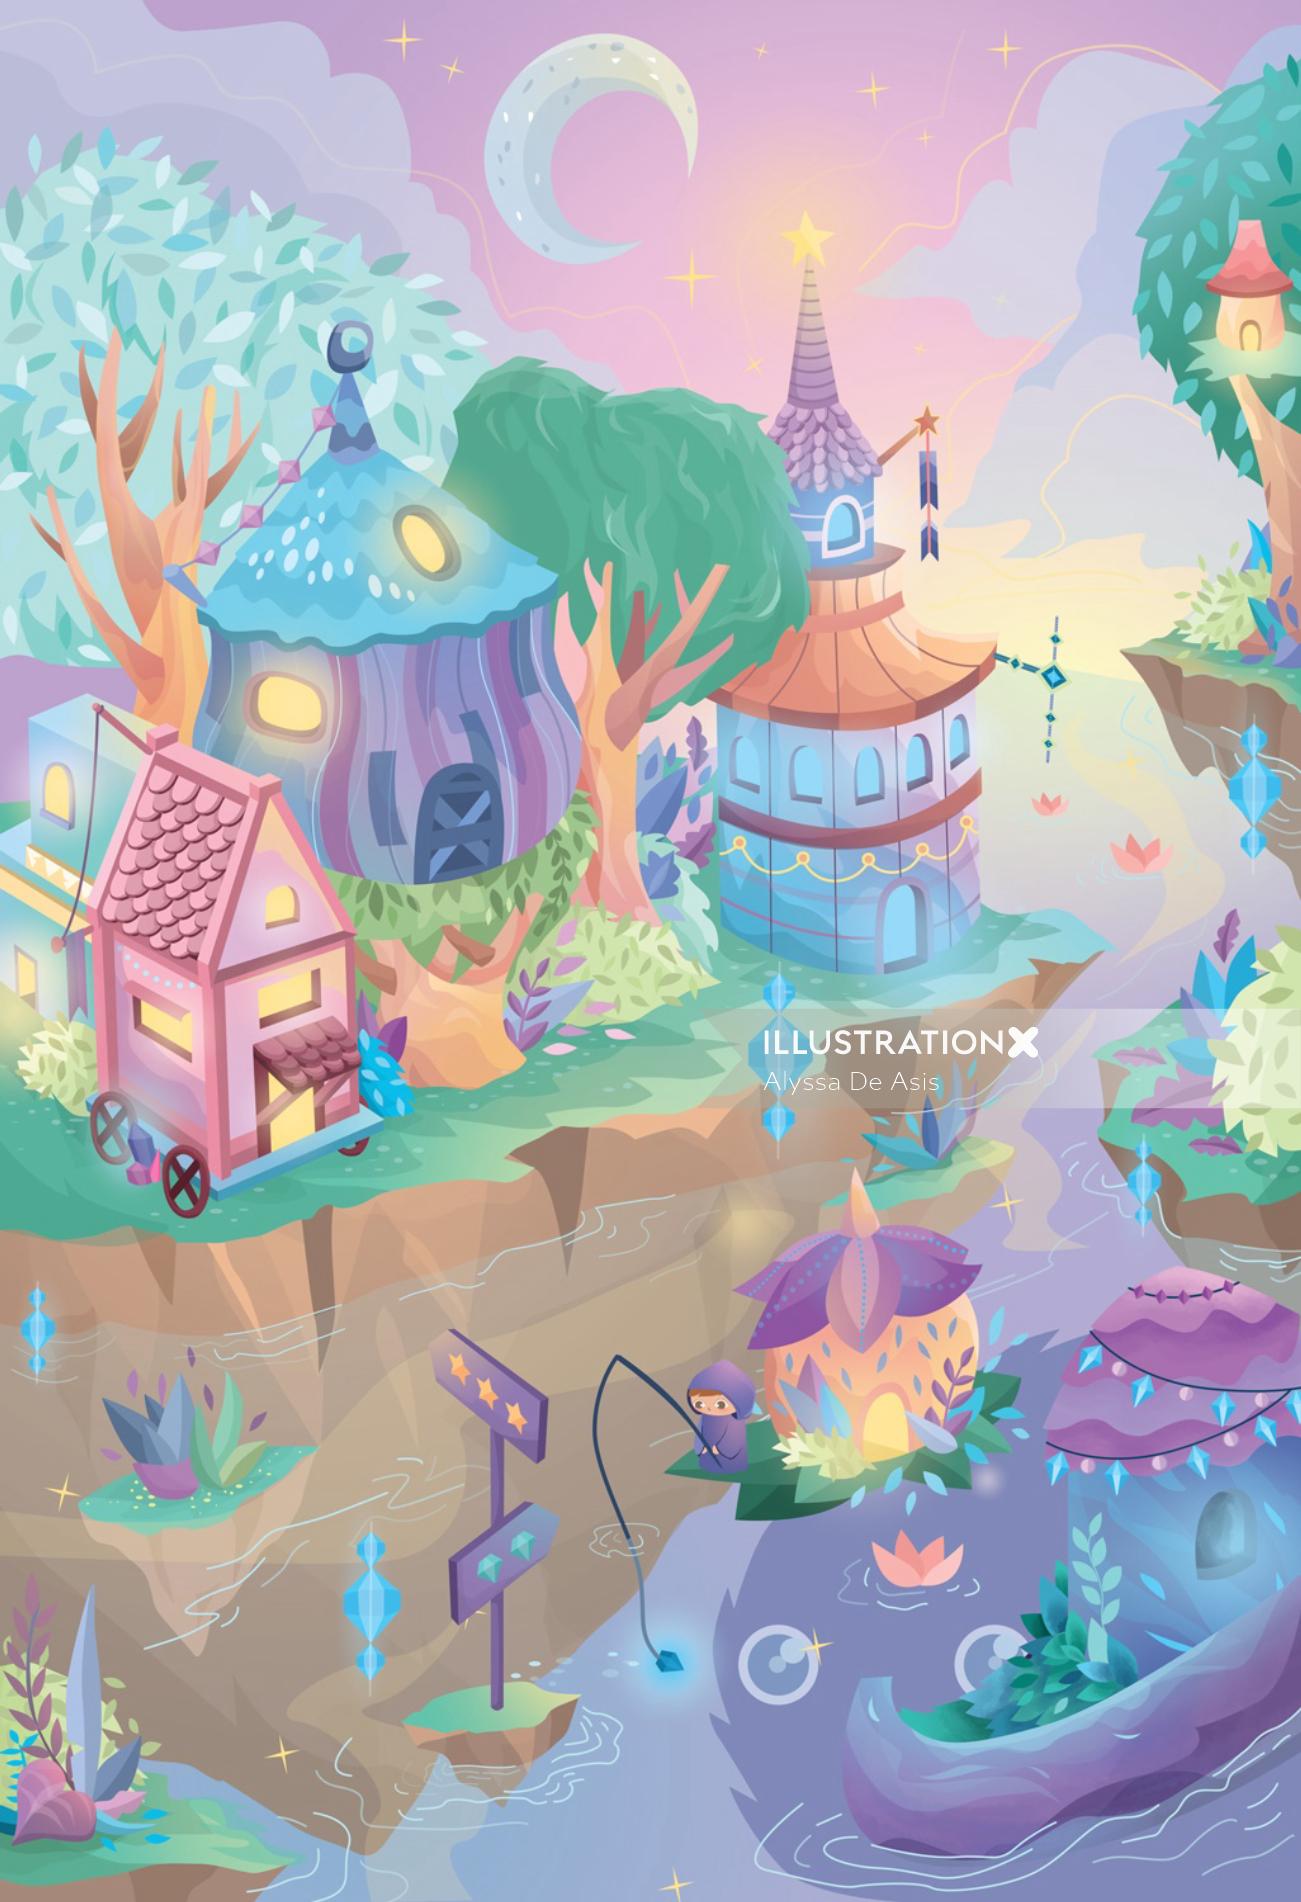 Fantasy illustration of magical world